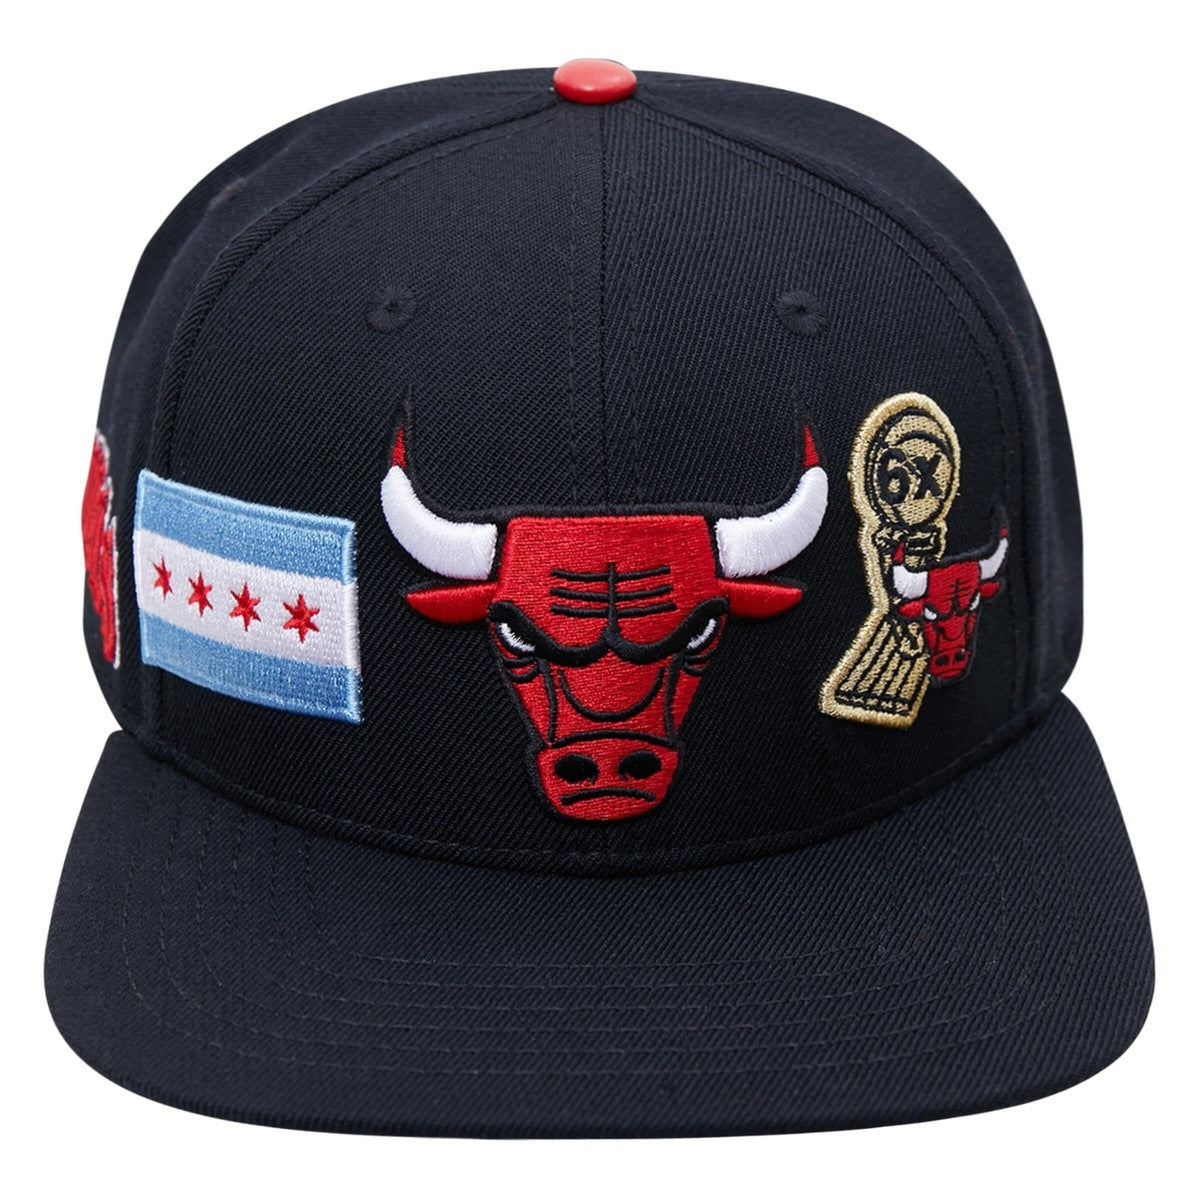 pink chicago bulls hat